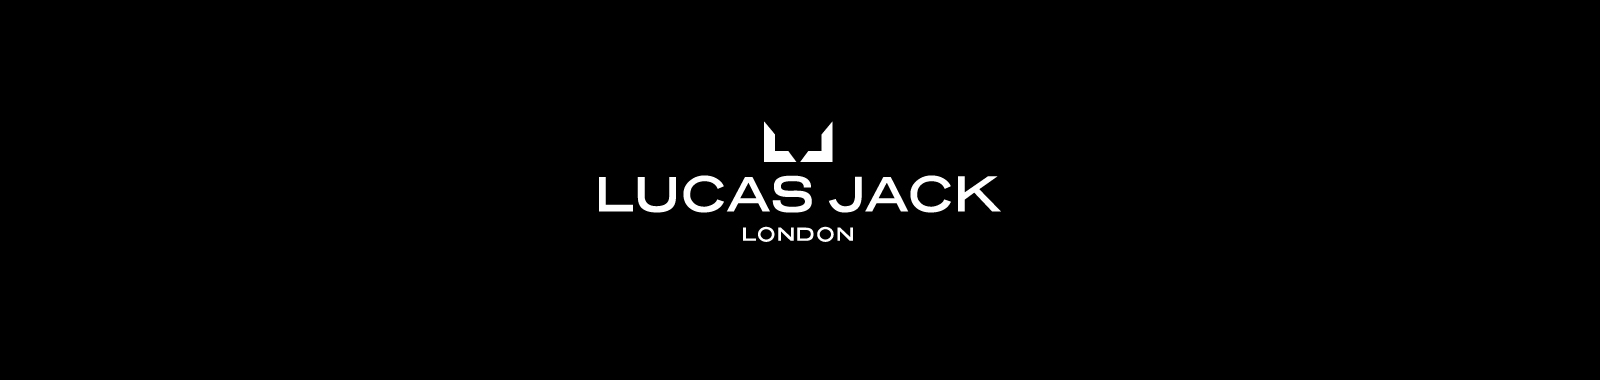 LUCAS JACK